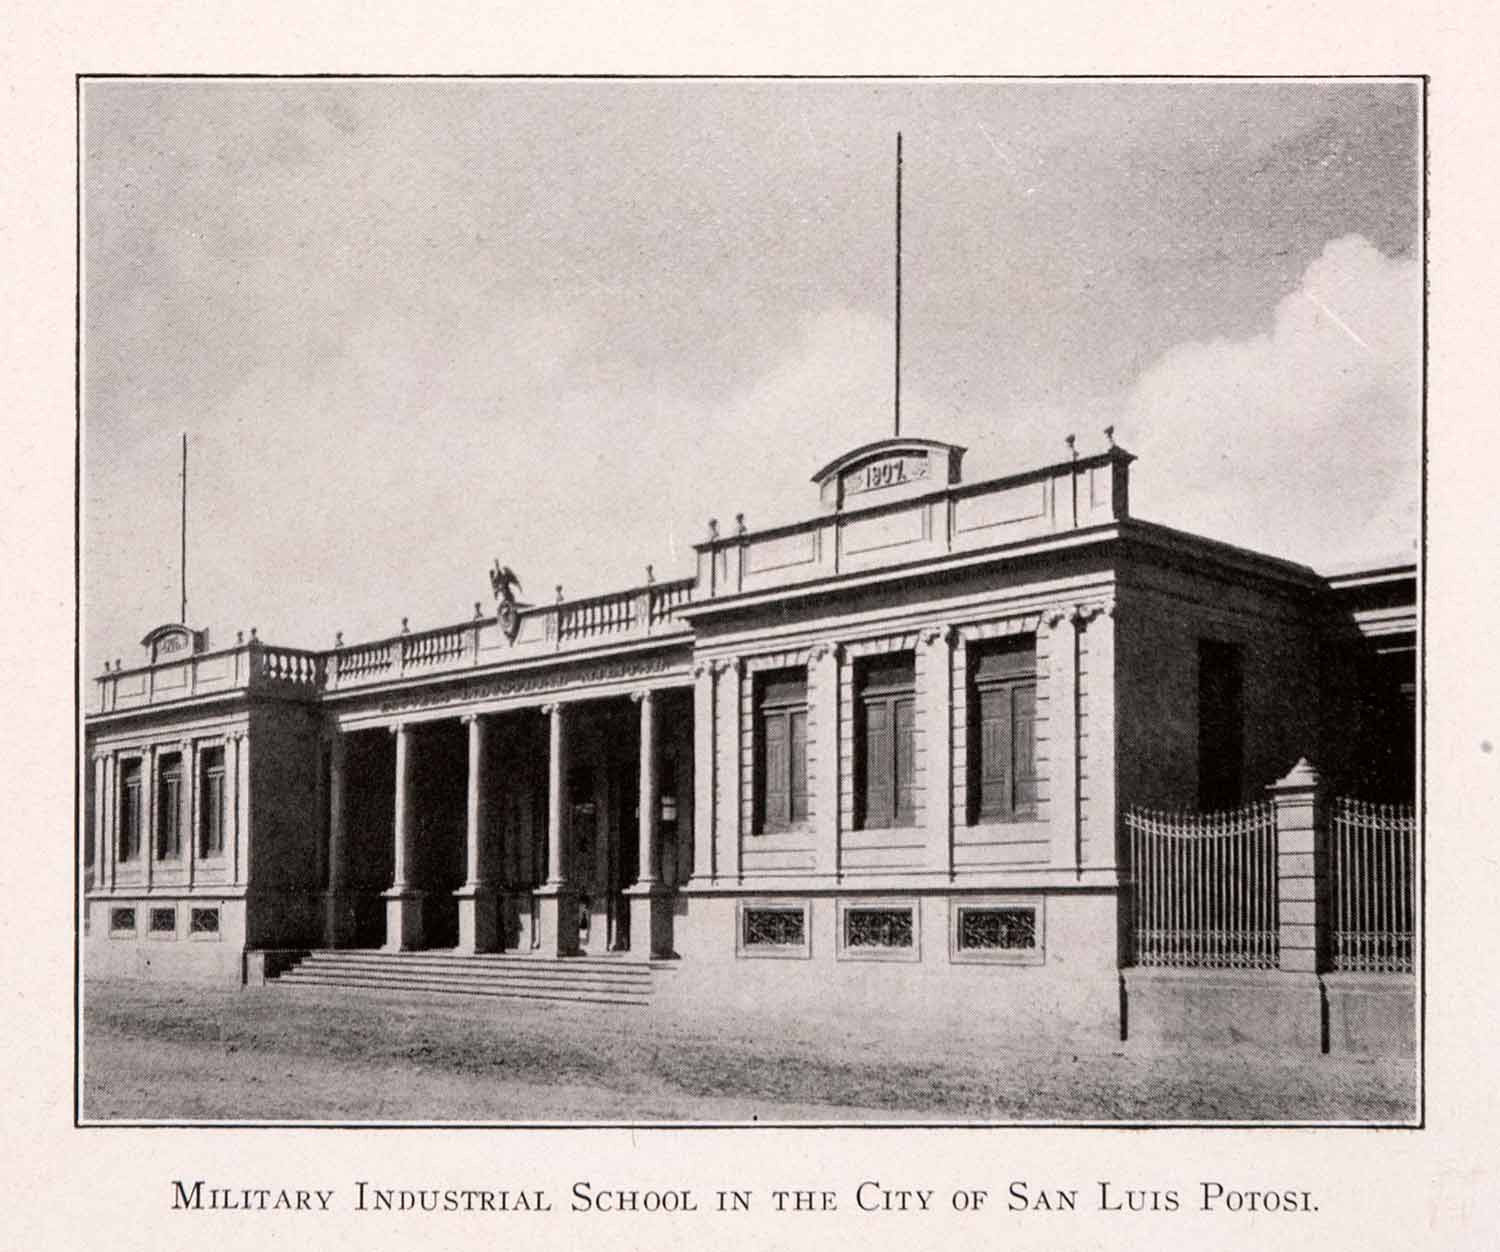 1911 Halftone Print Military Industrial School San Luis Potosi Mexico Army XGQA5 - Period Paper
